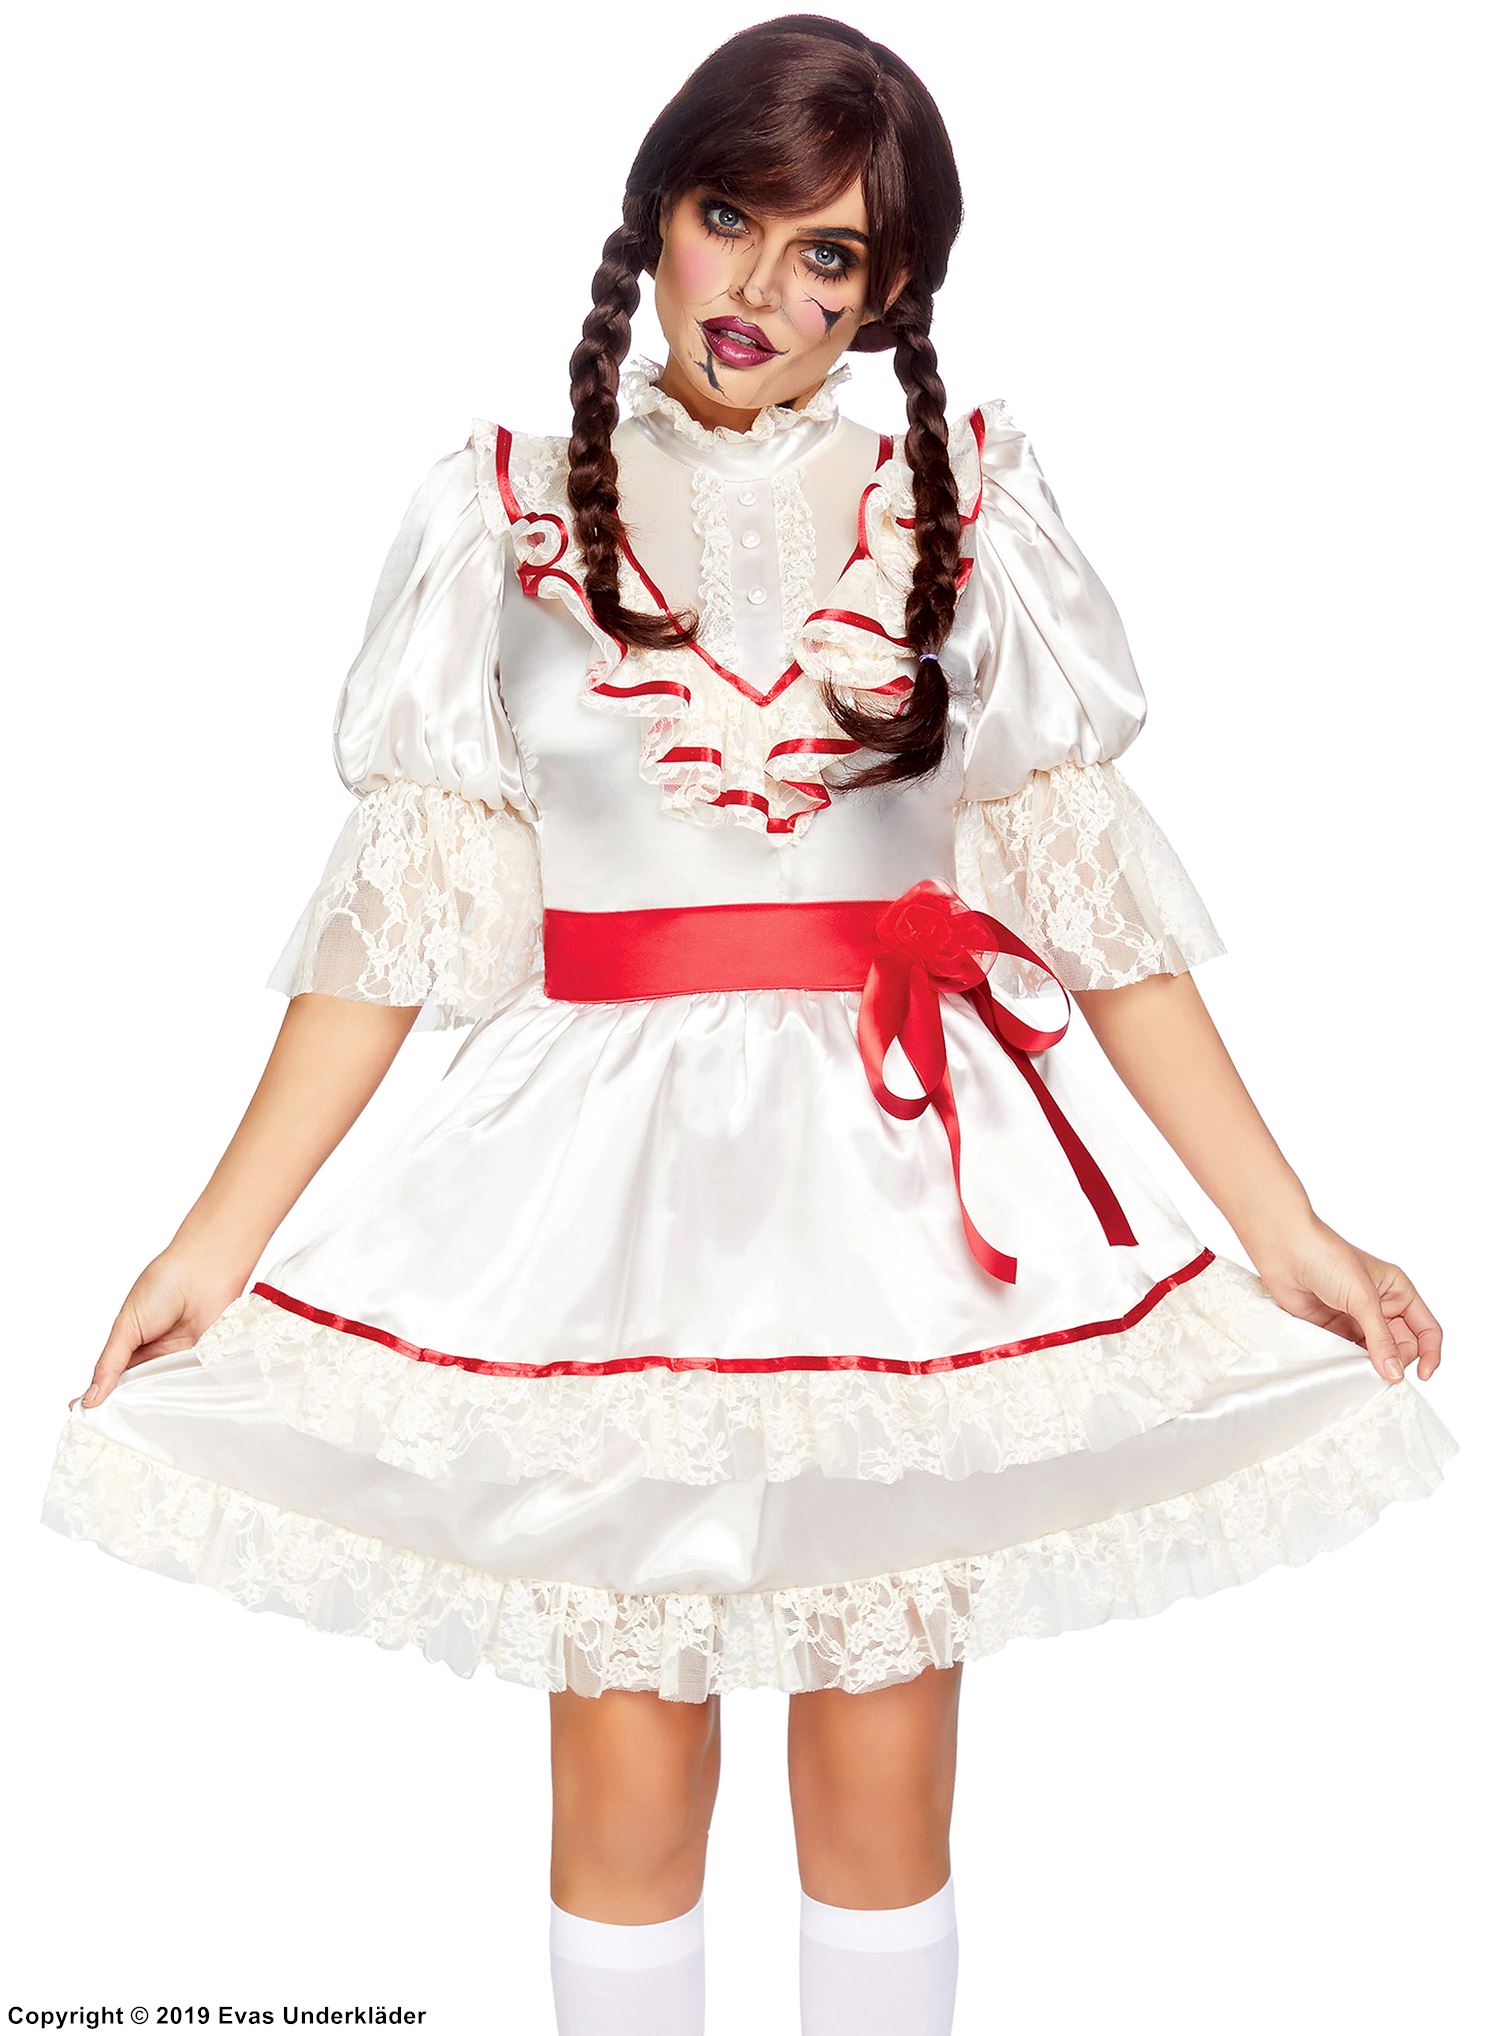 Annabelle doll, costume dress, lace trim, ruffles, sash